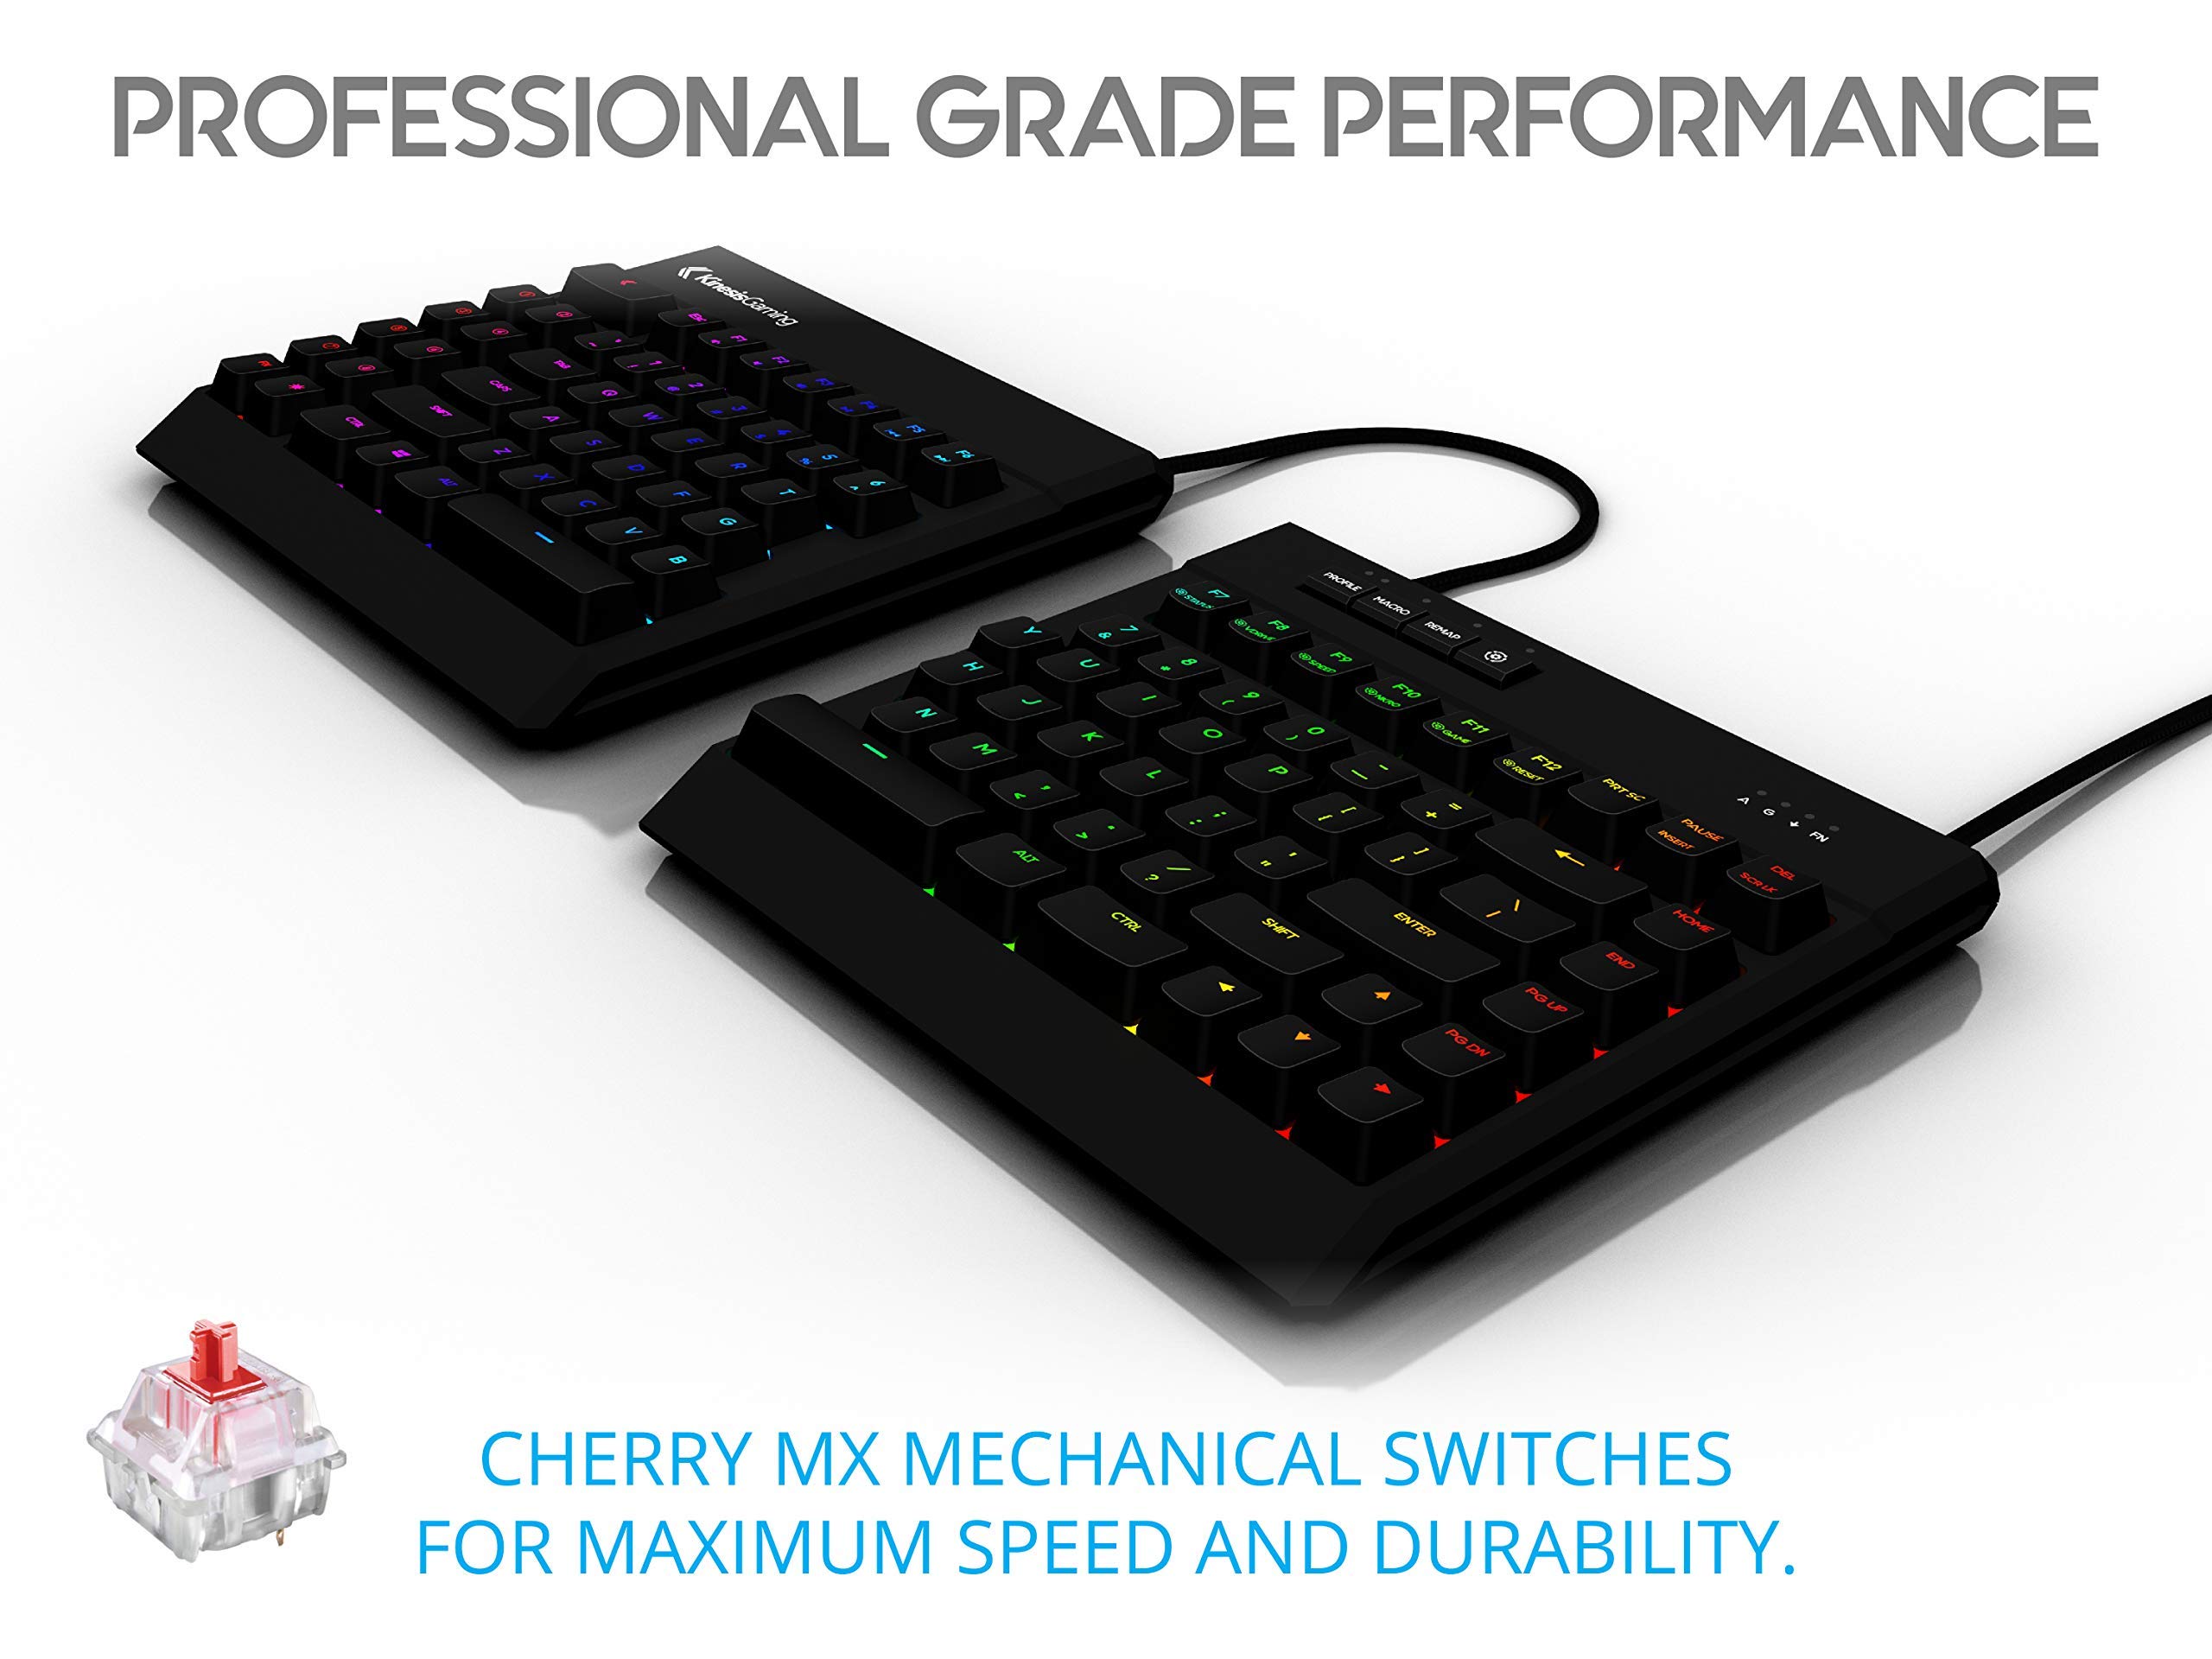 KINESIS Gaming Freestyle Edge RGB Split Mechanical Keyboard (MX Red) (Renewed)